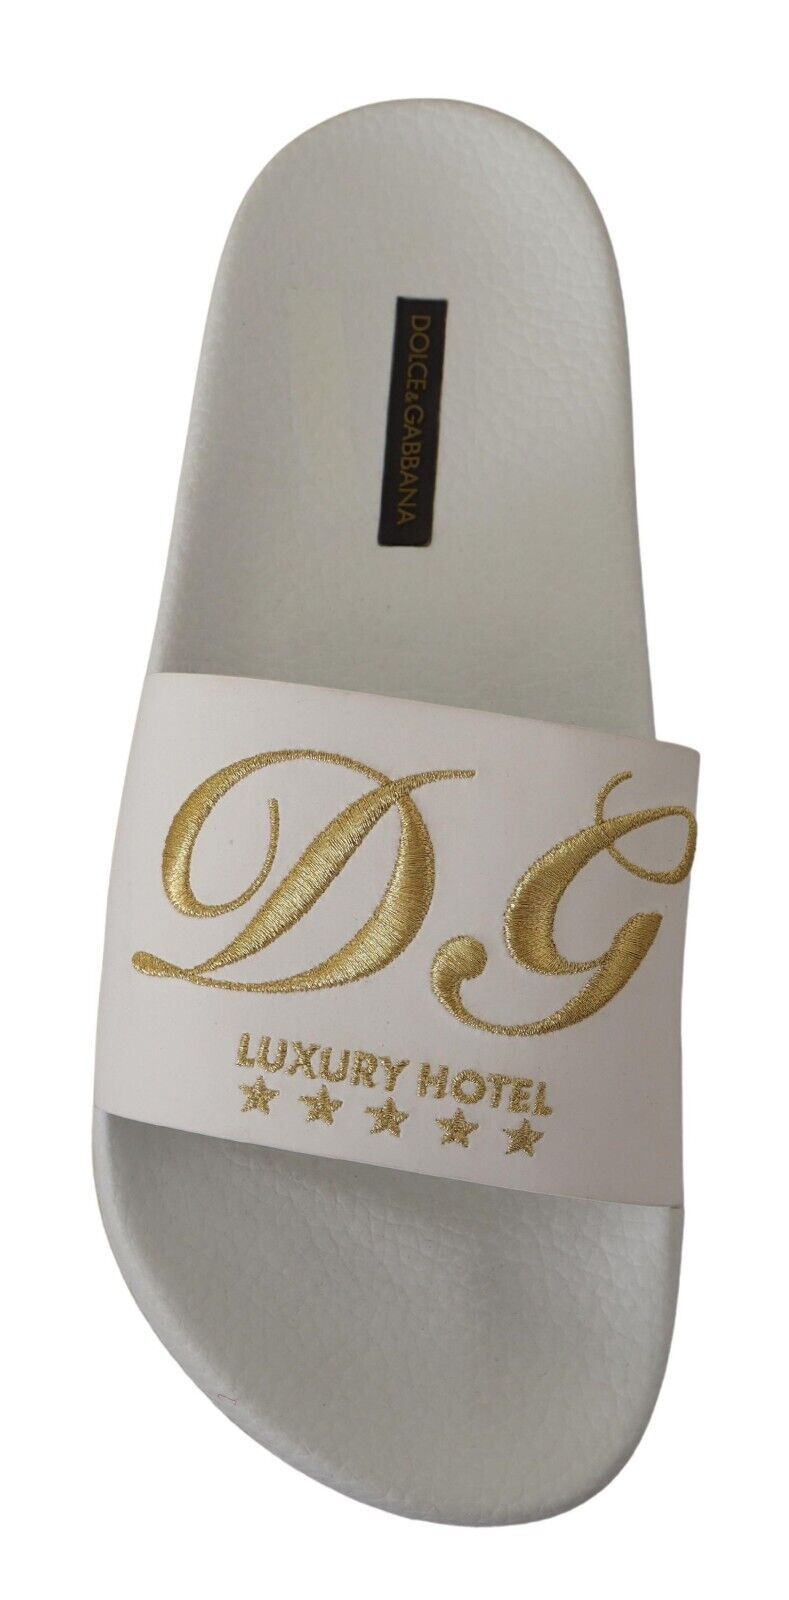 Dolce & Gabbana White Leather Luxury Hotel Slides Sandals Shoes